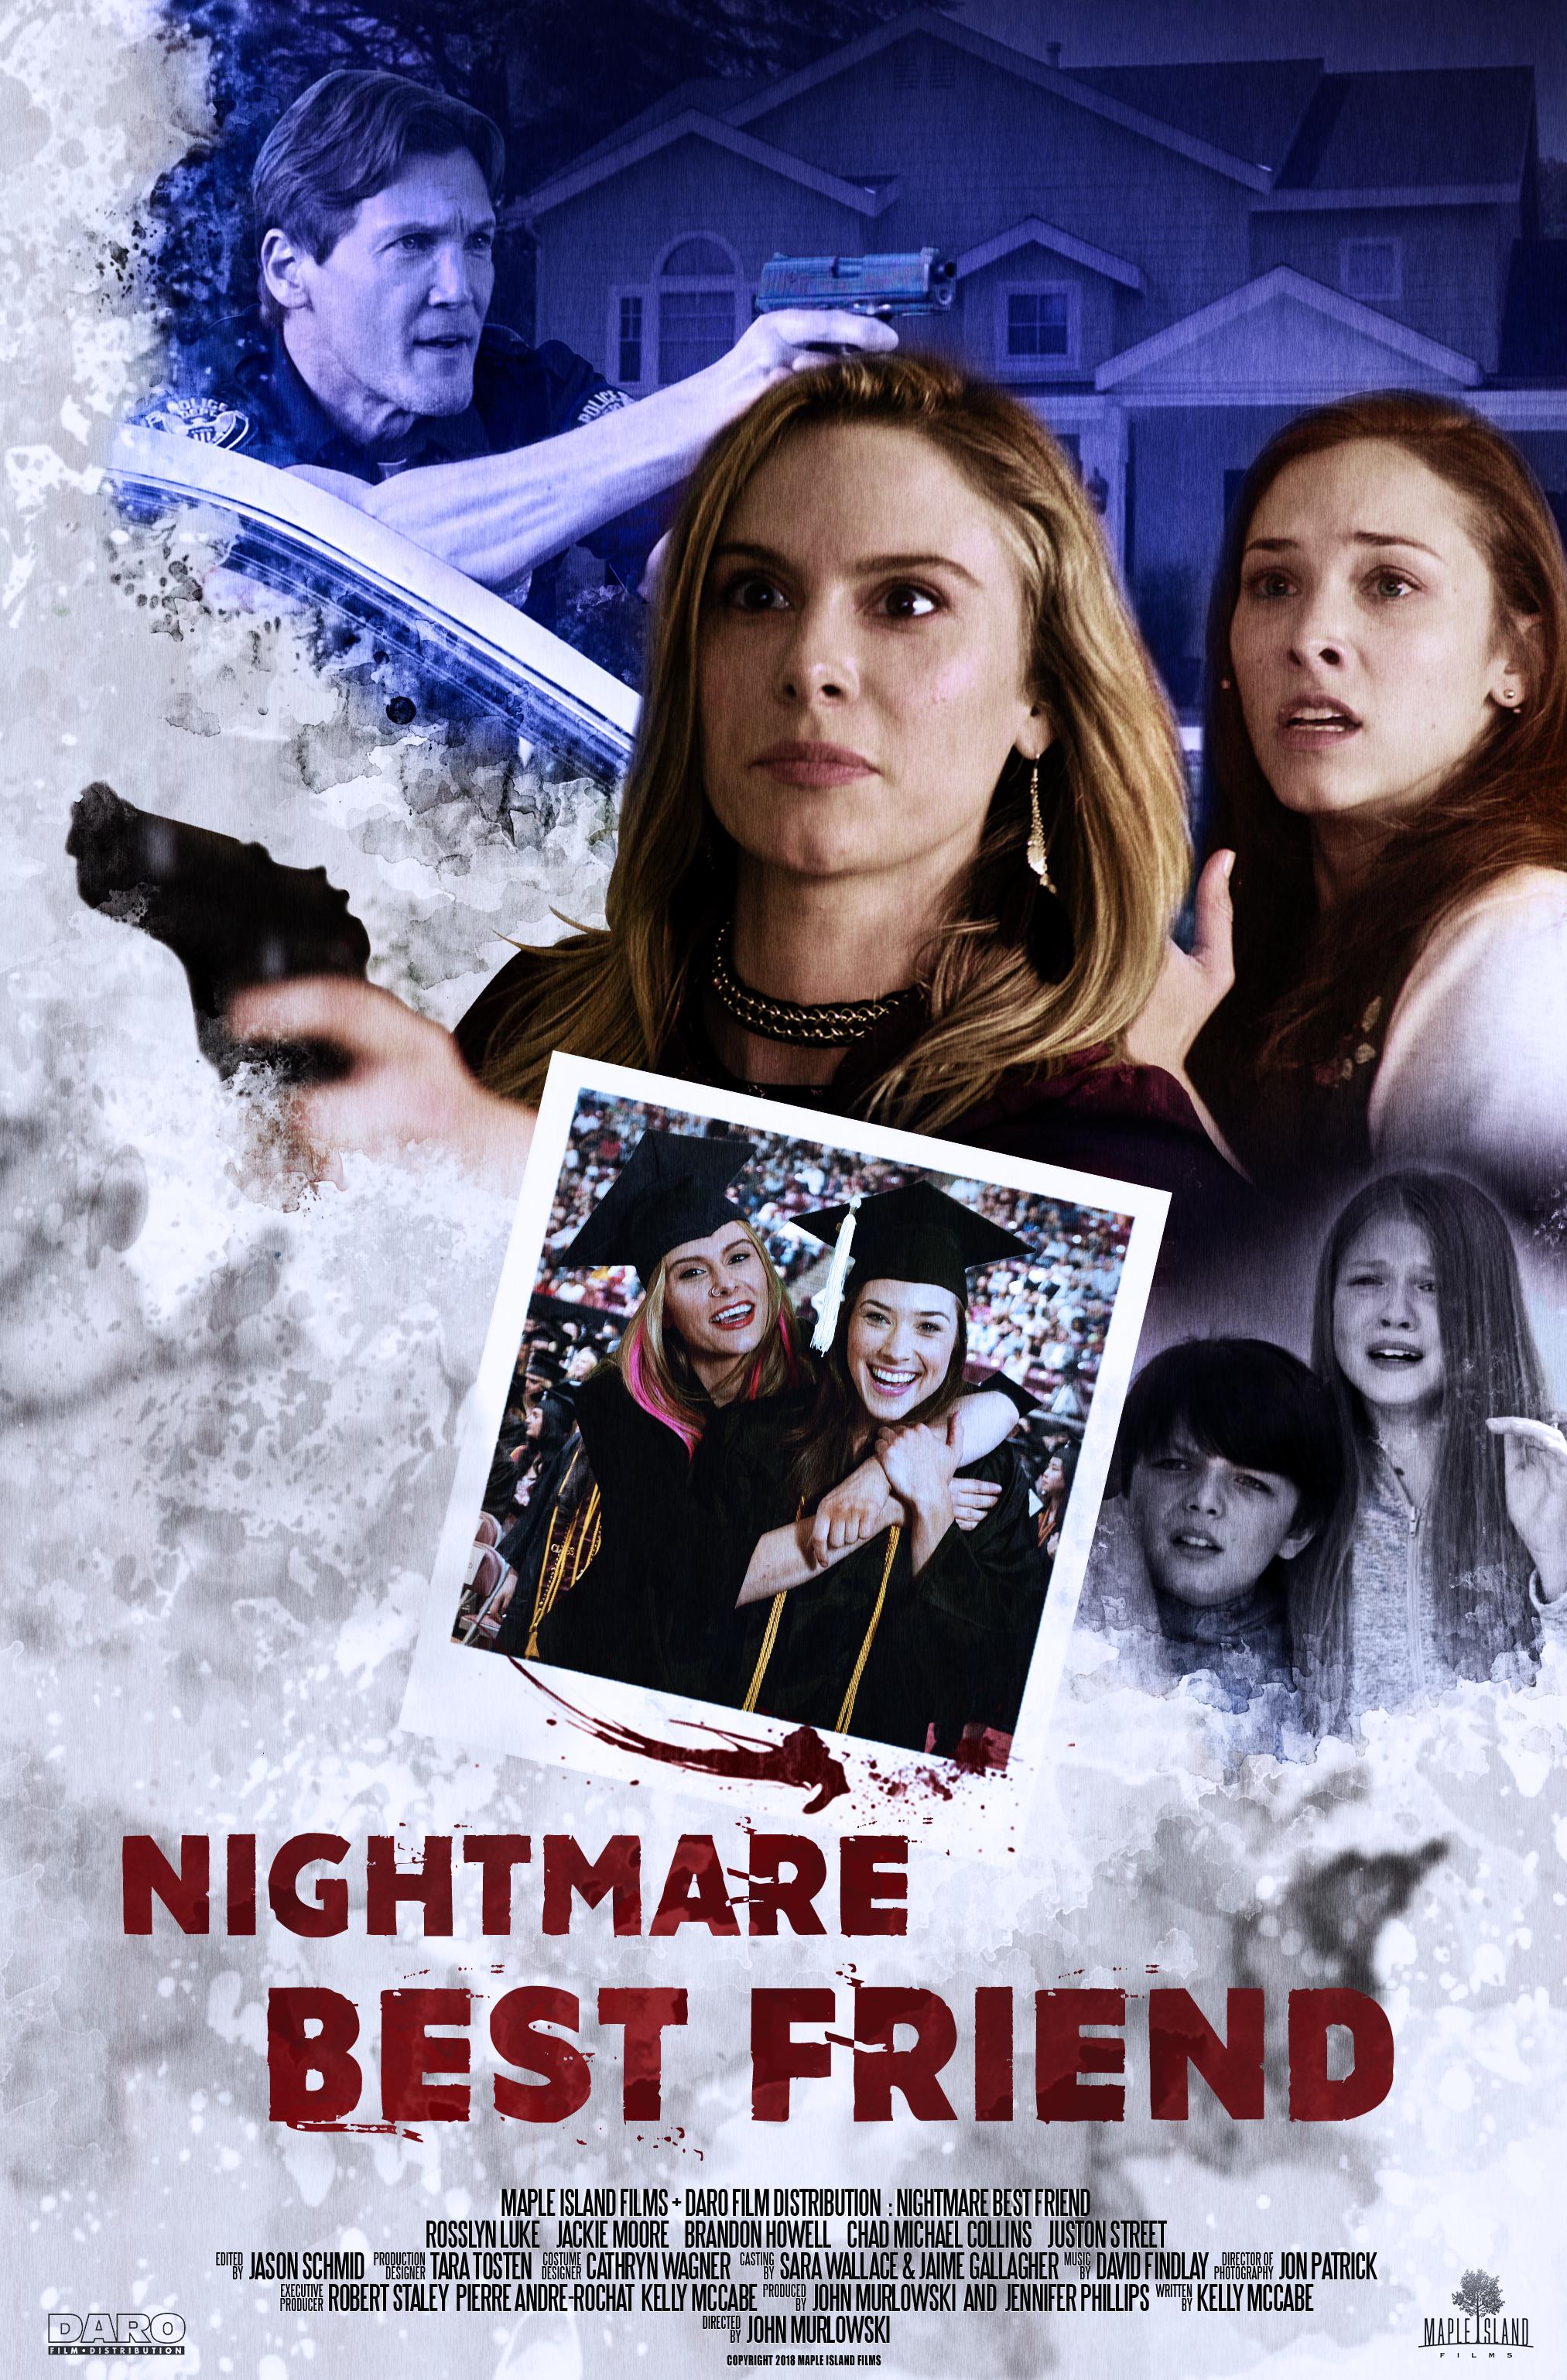 Nonton film Nightmare Best Friend layarkaca21 indoxx1 ganool online streaming terbaru